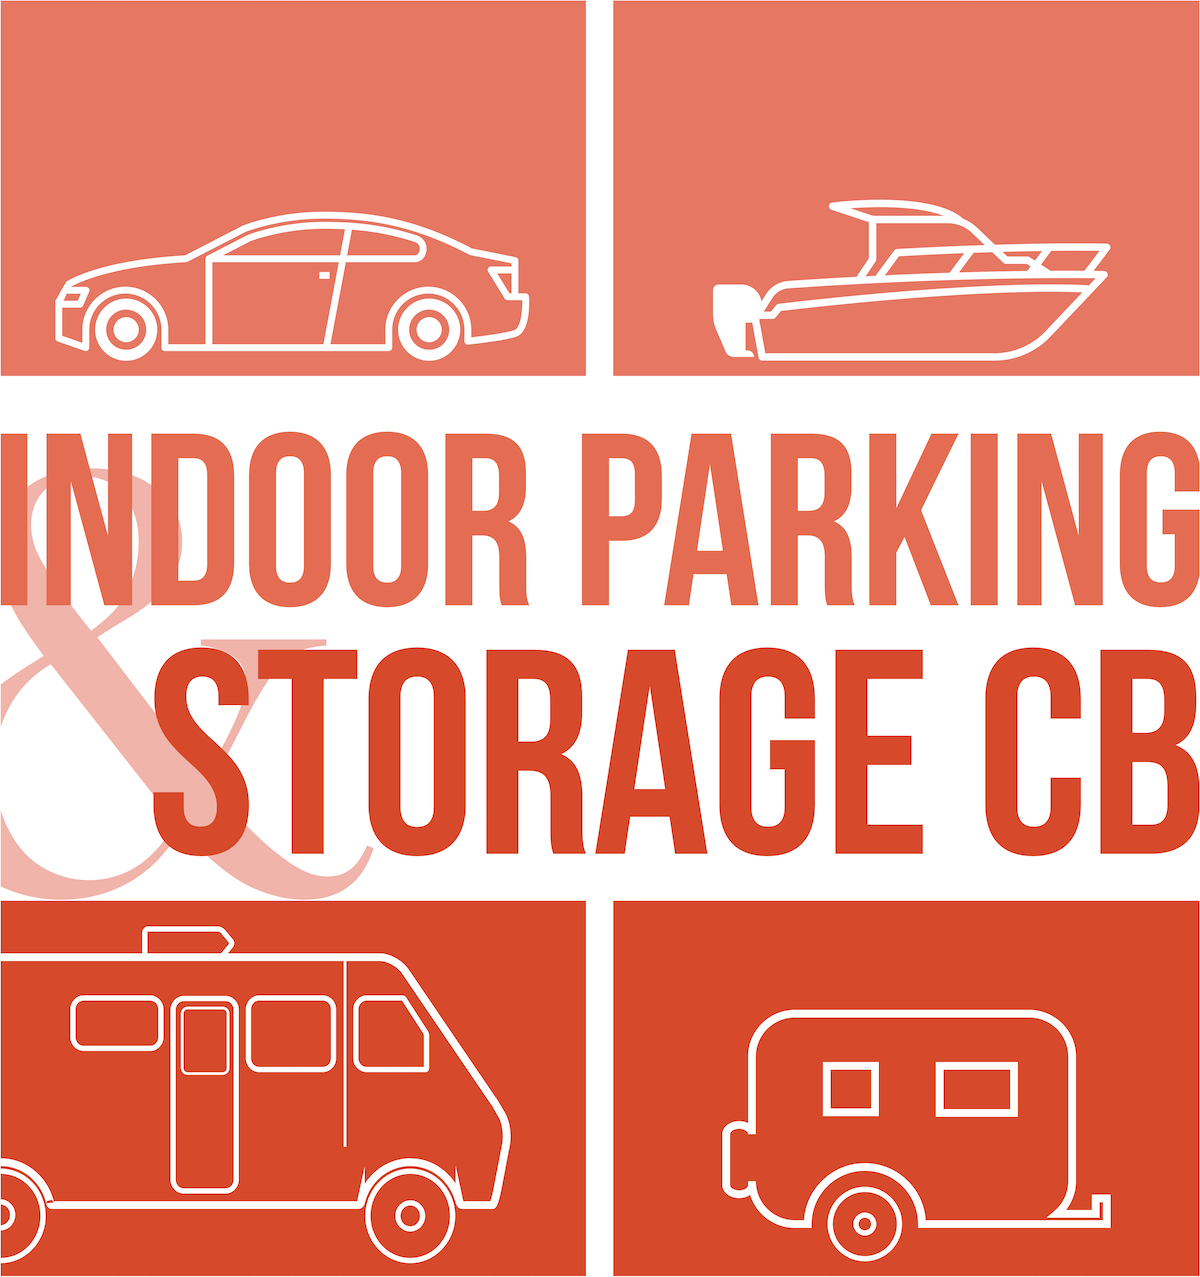 Indoor Parking & Storage CB